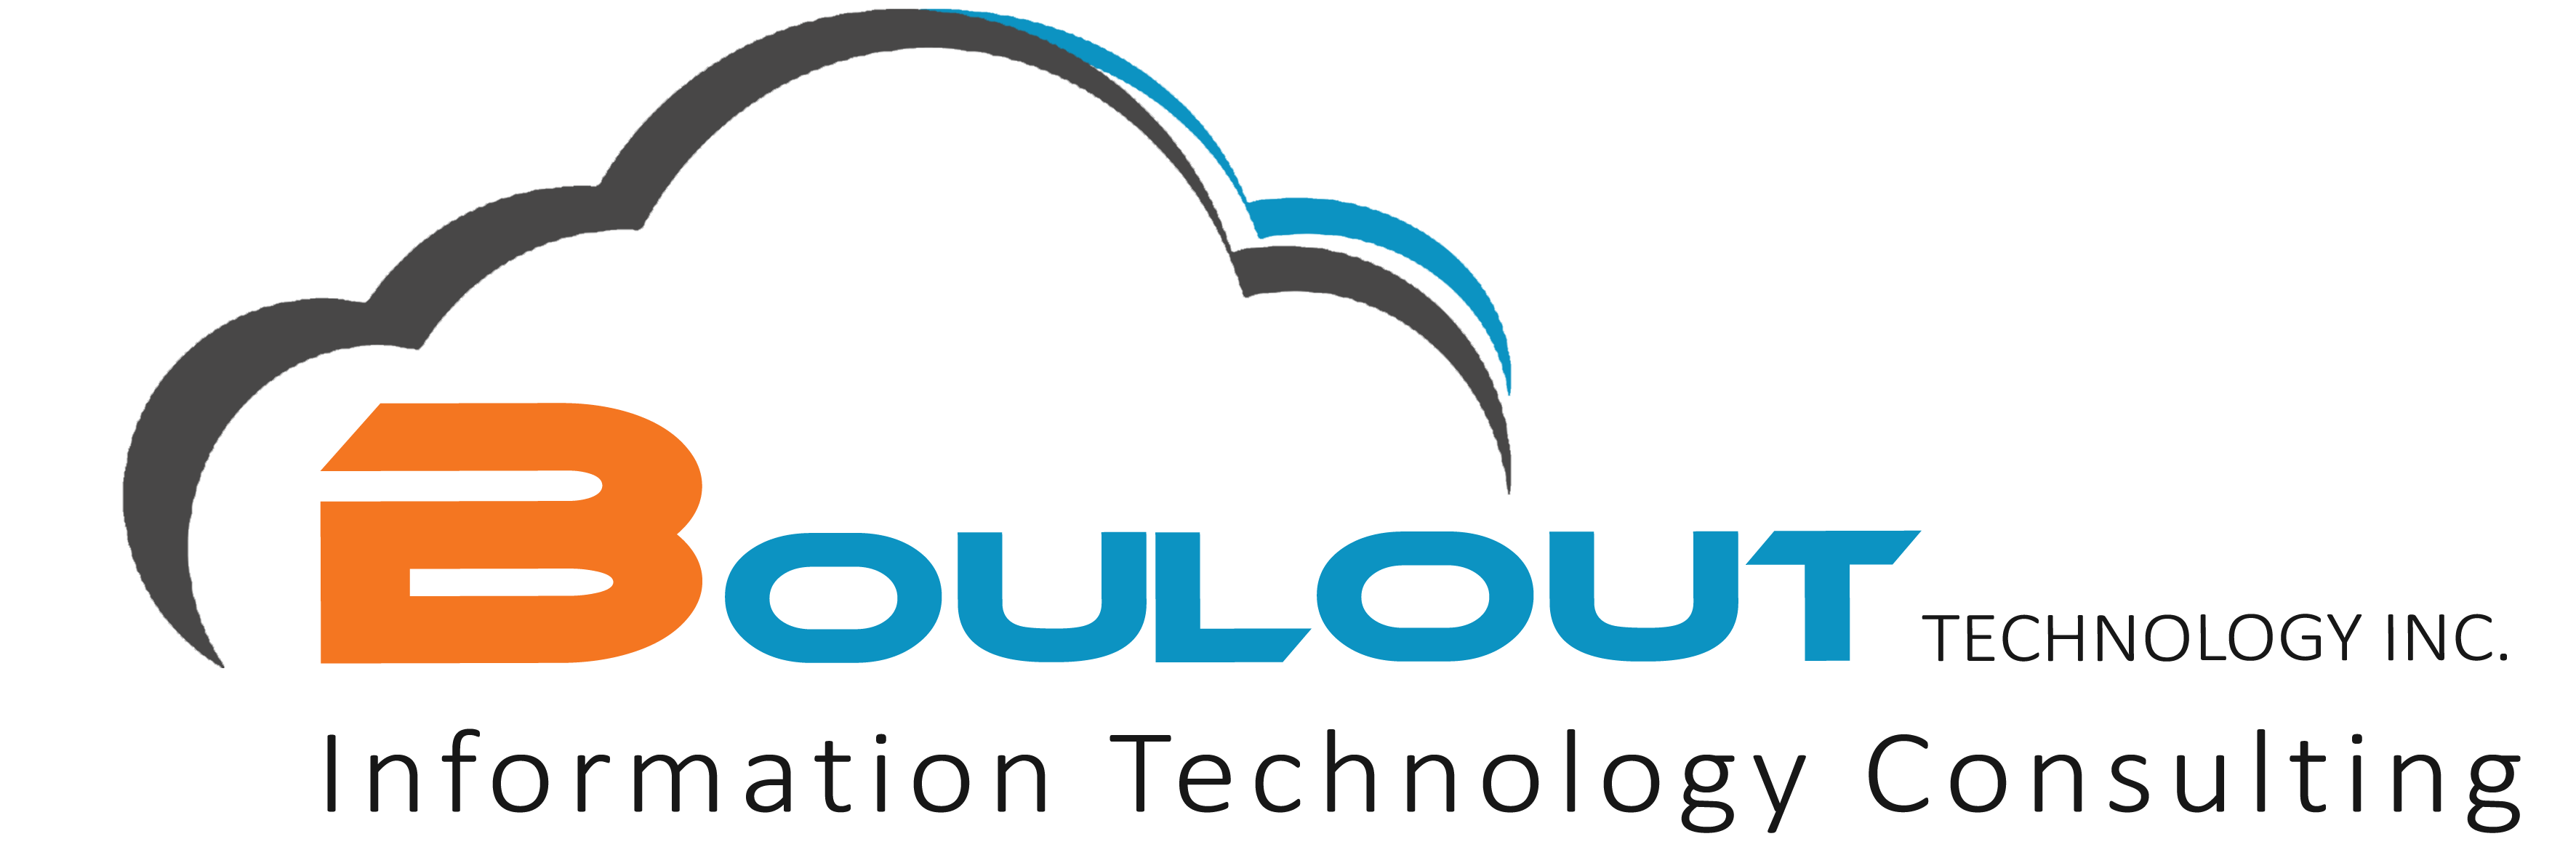 Boulout Technology Inc